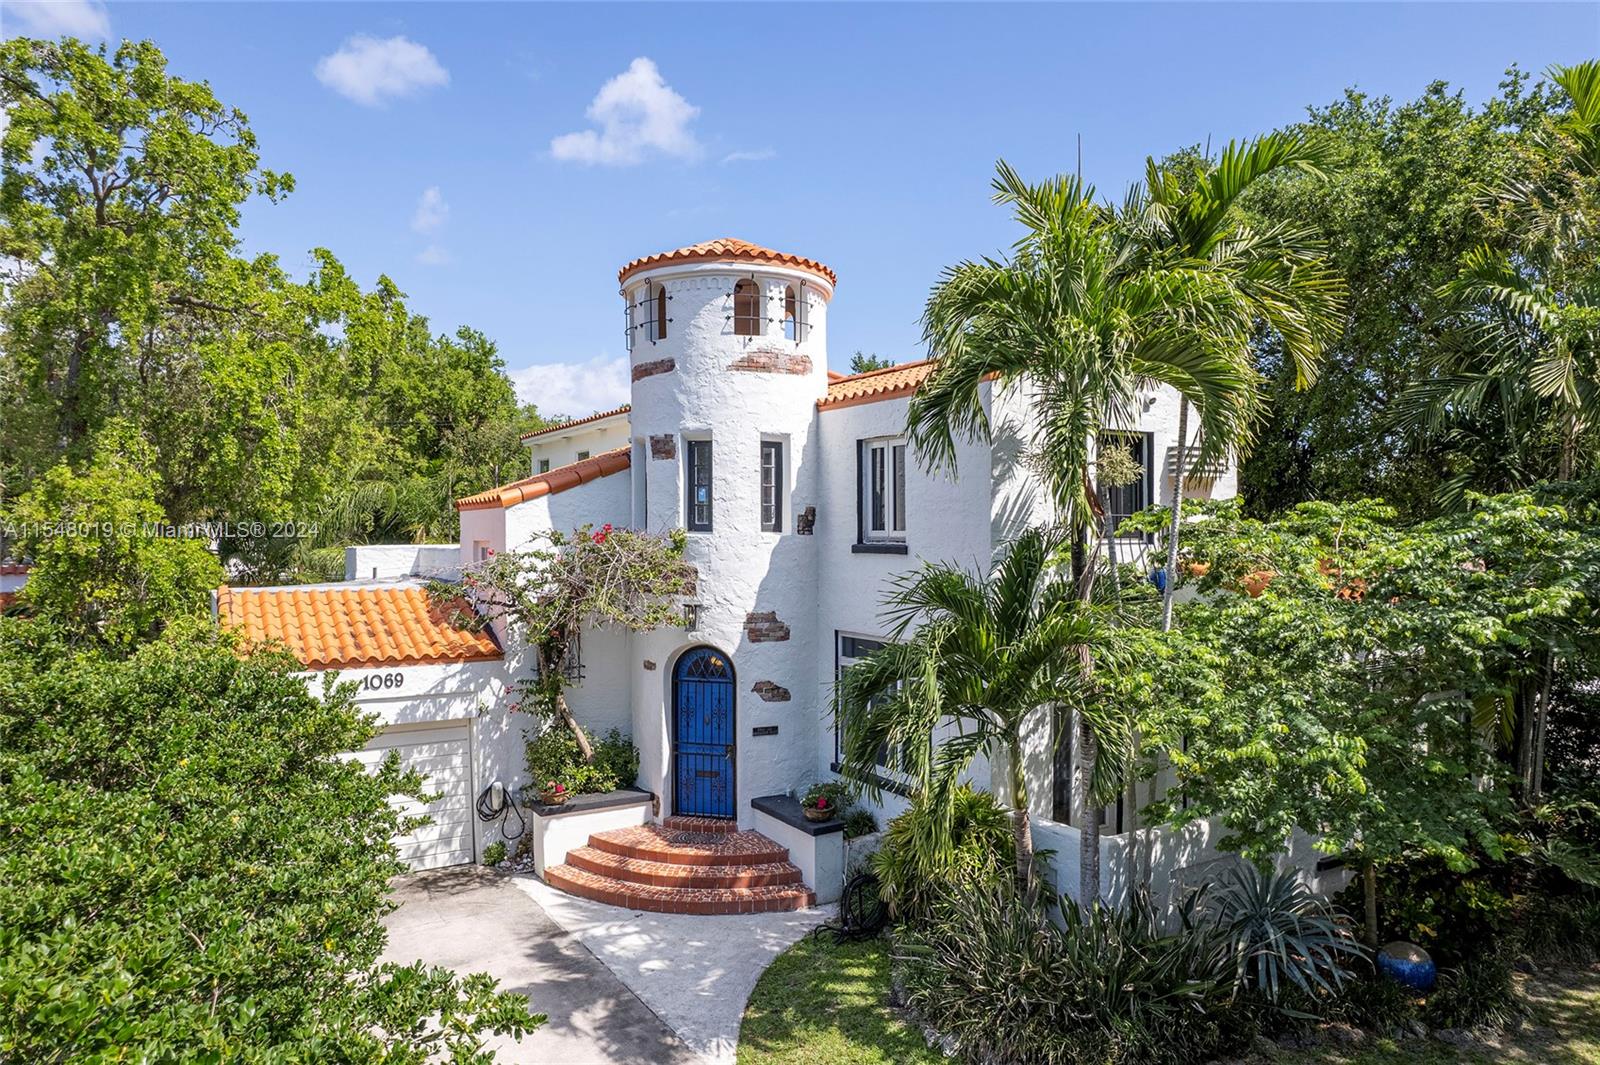 Property for Sale at 1069 Ne 91st Ter Ter, Miami Shores, Miami-Dade County, Florida - Bedrooms: 4 
Bathrooms: 3  - $2,199,000